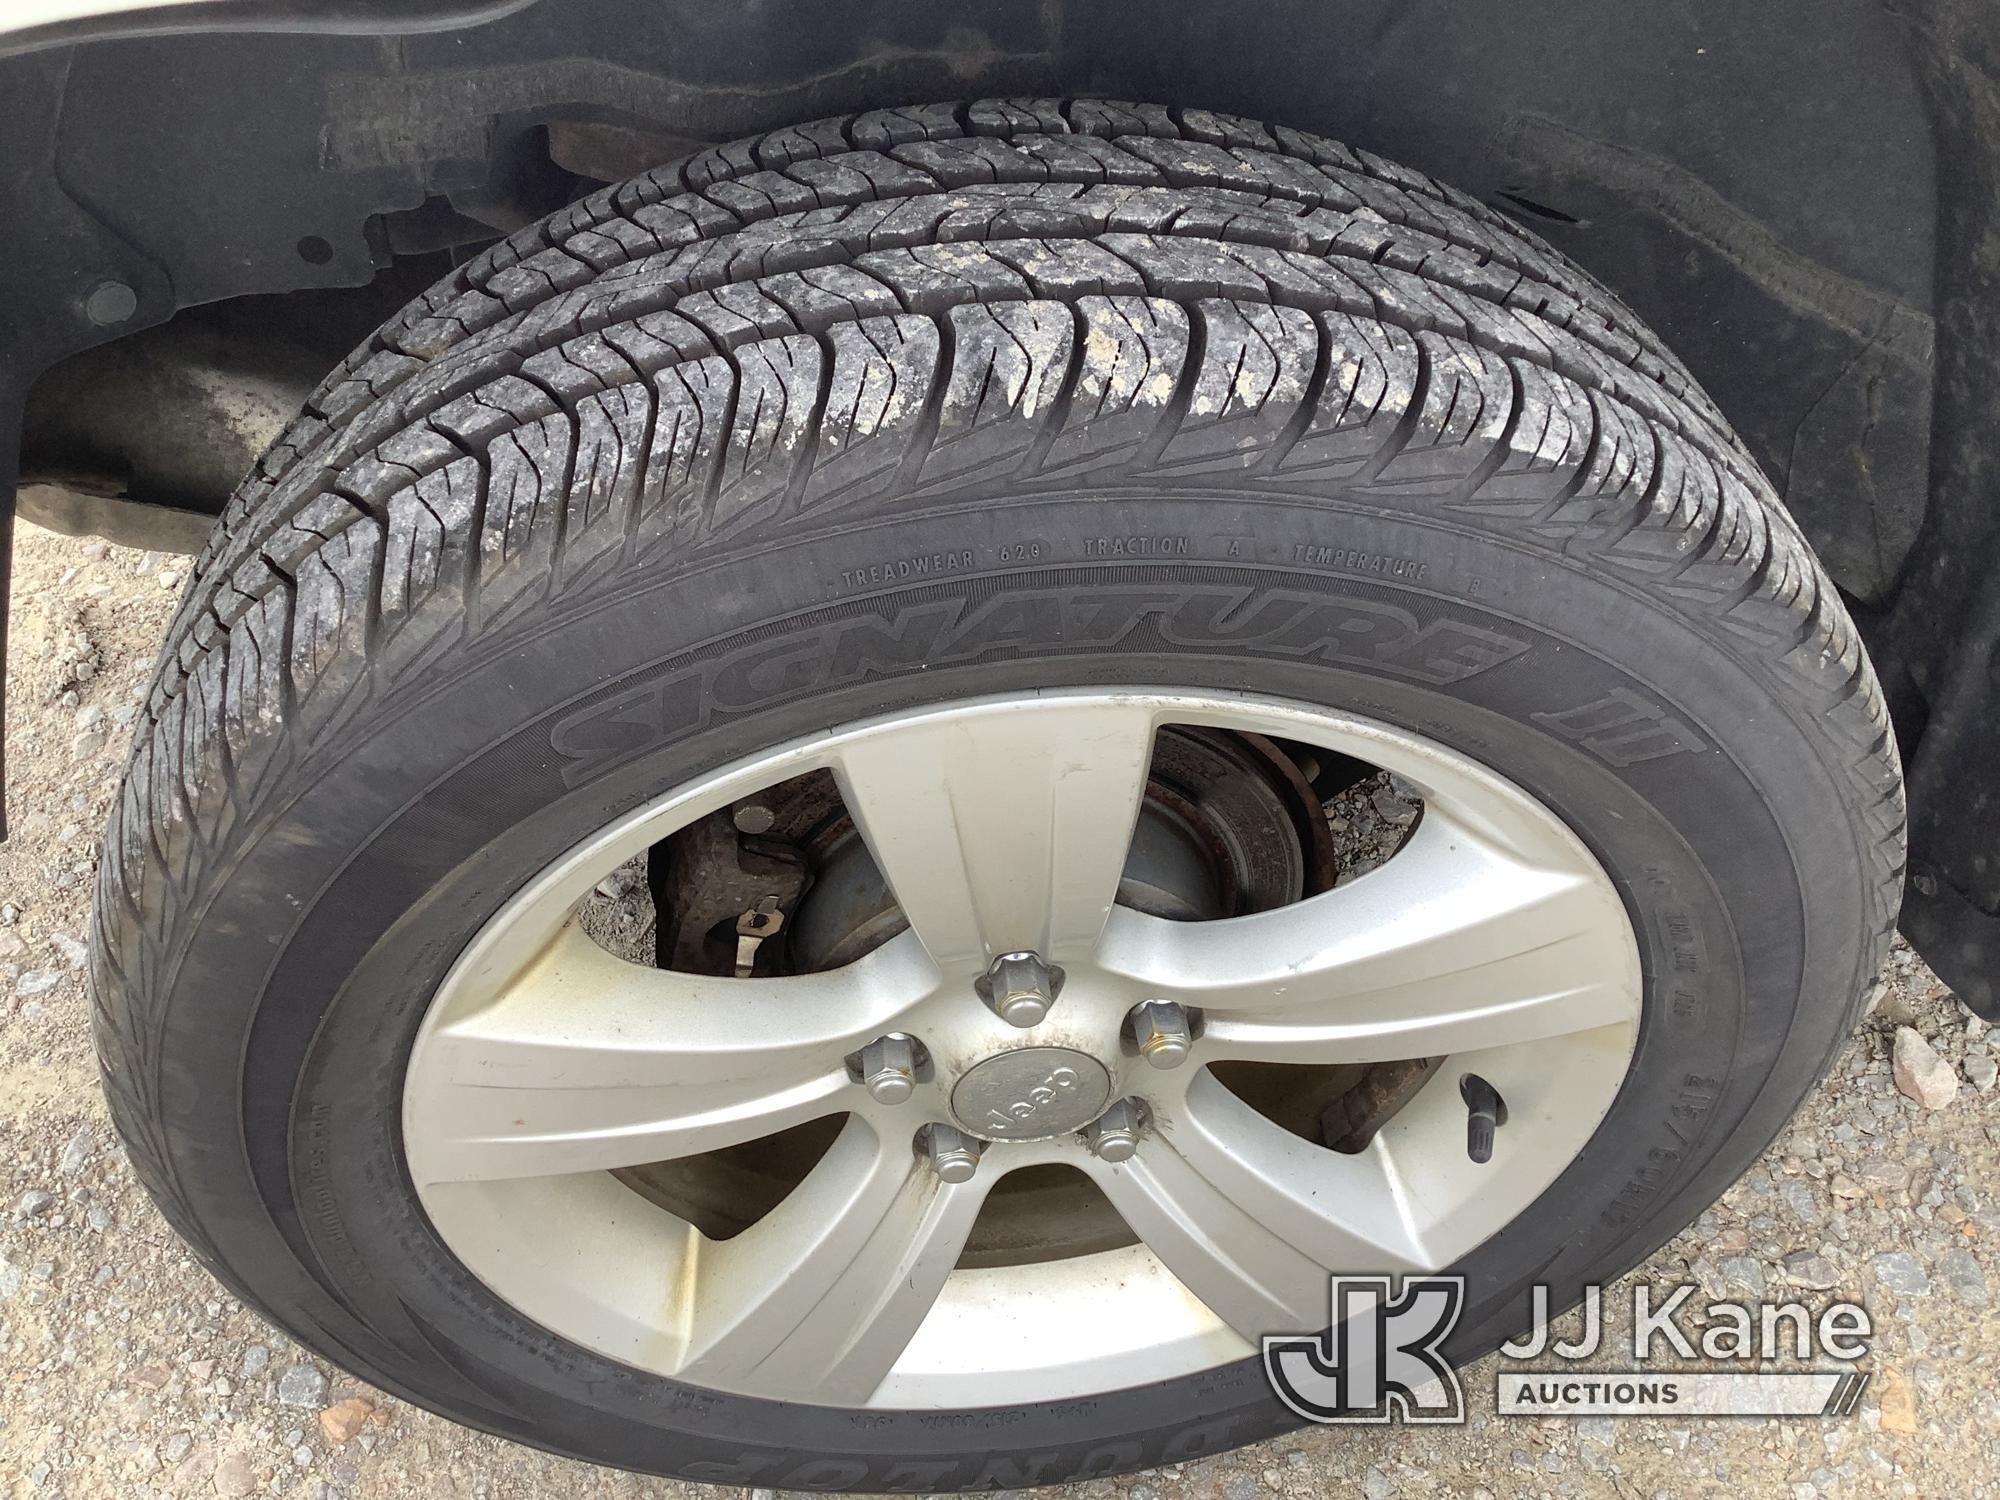 (Smock, PA) 2014 Jeep Patriot 4x4 Sport Utility Vehicle Runs & Moves, Rust Damage